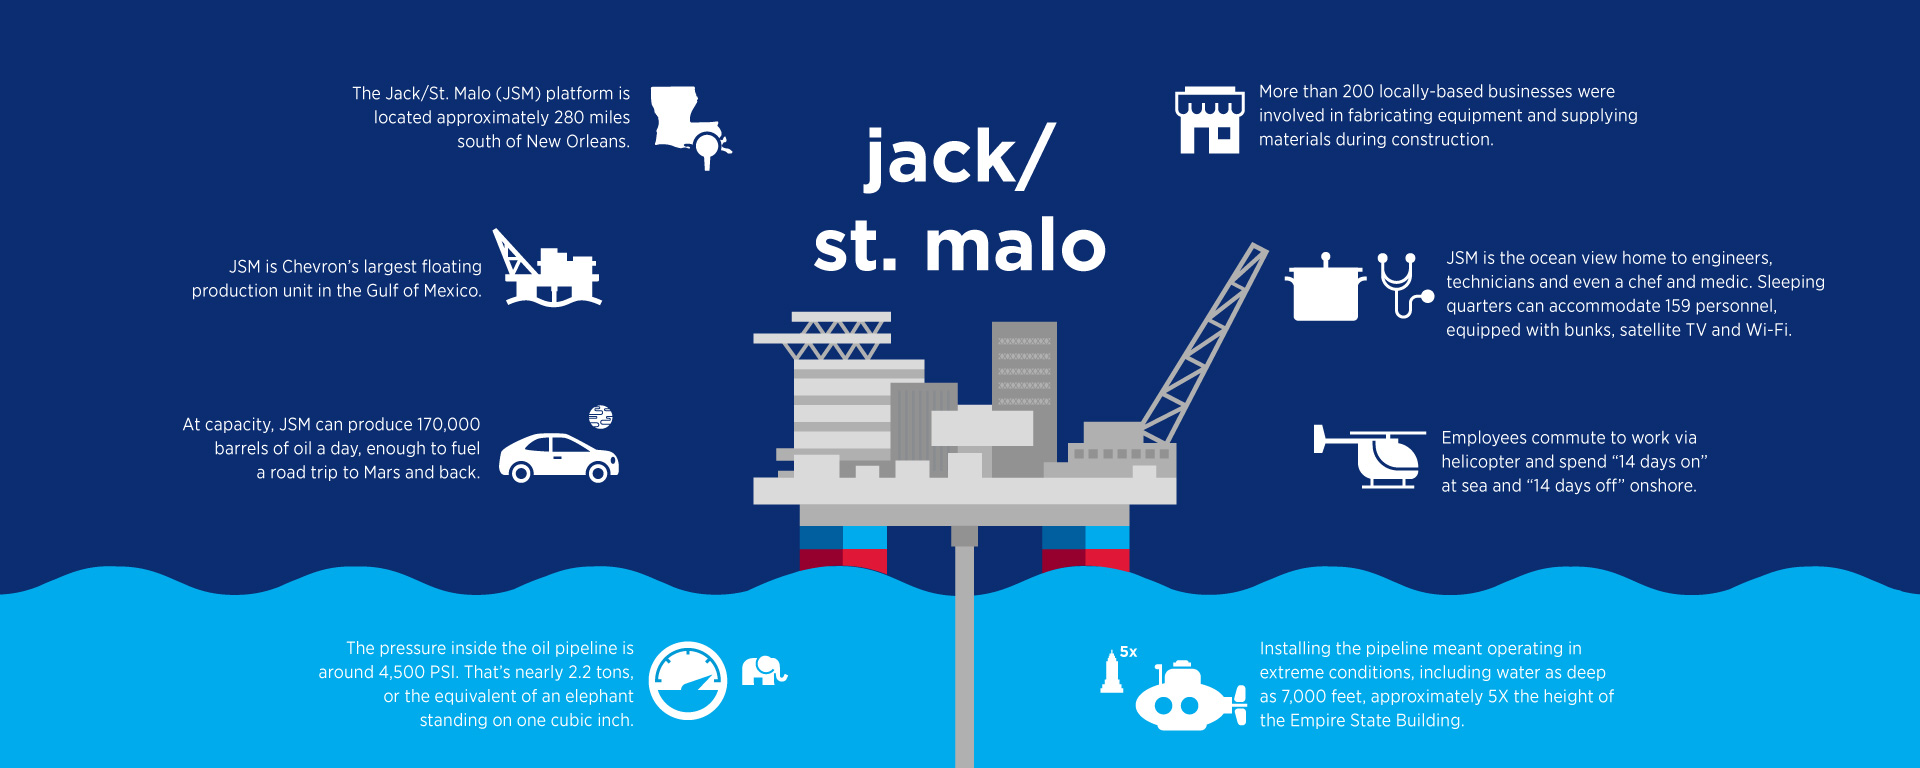 Offshore jack/st. malo platform infographic showing impressive facts.